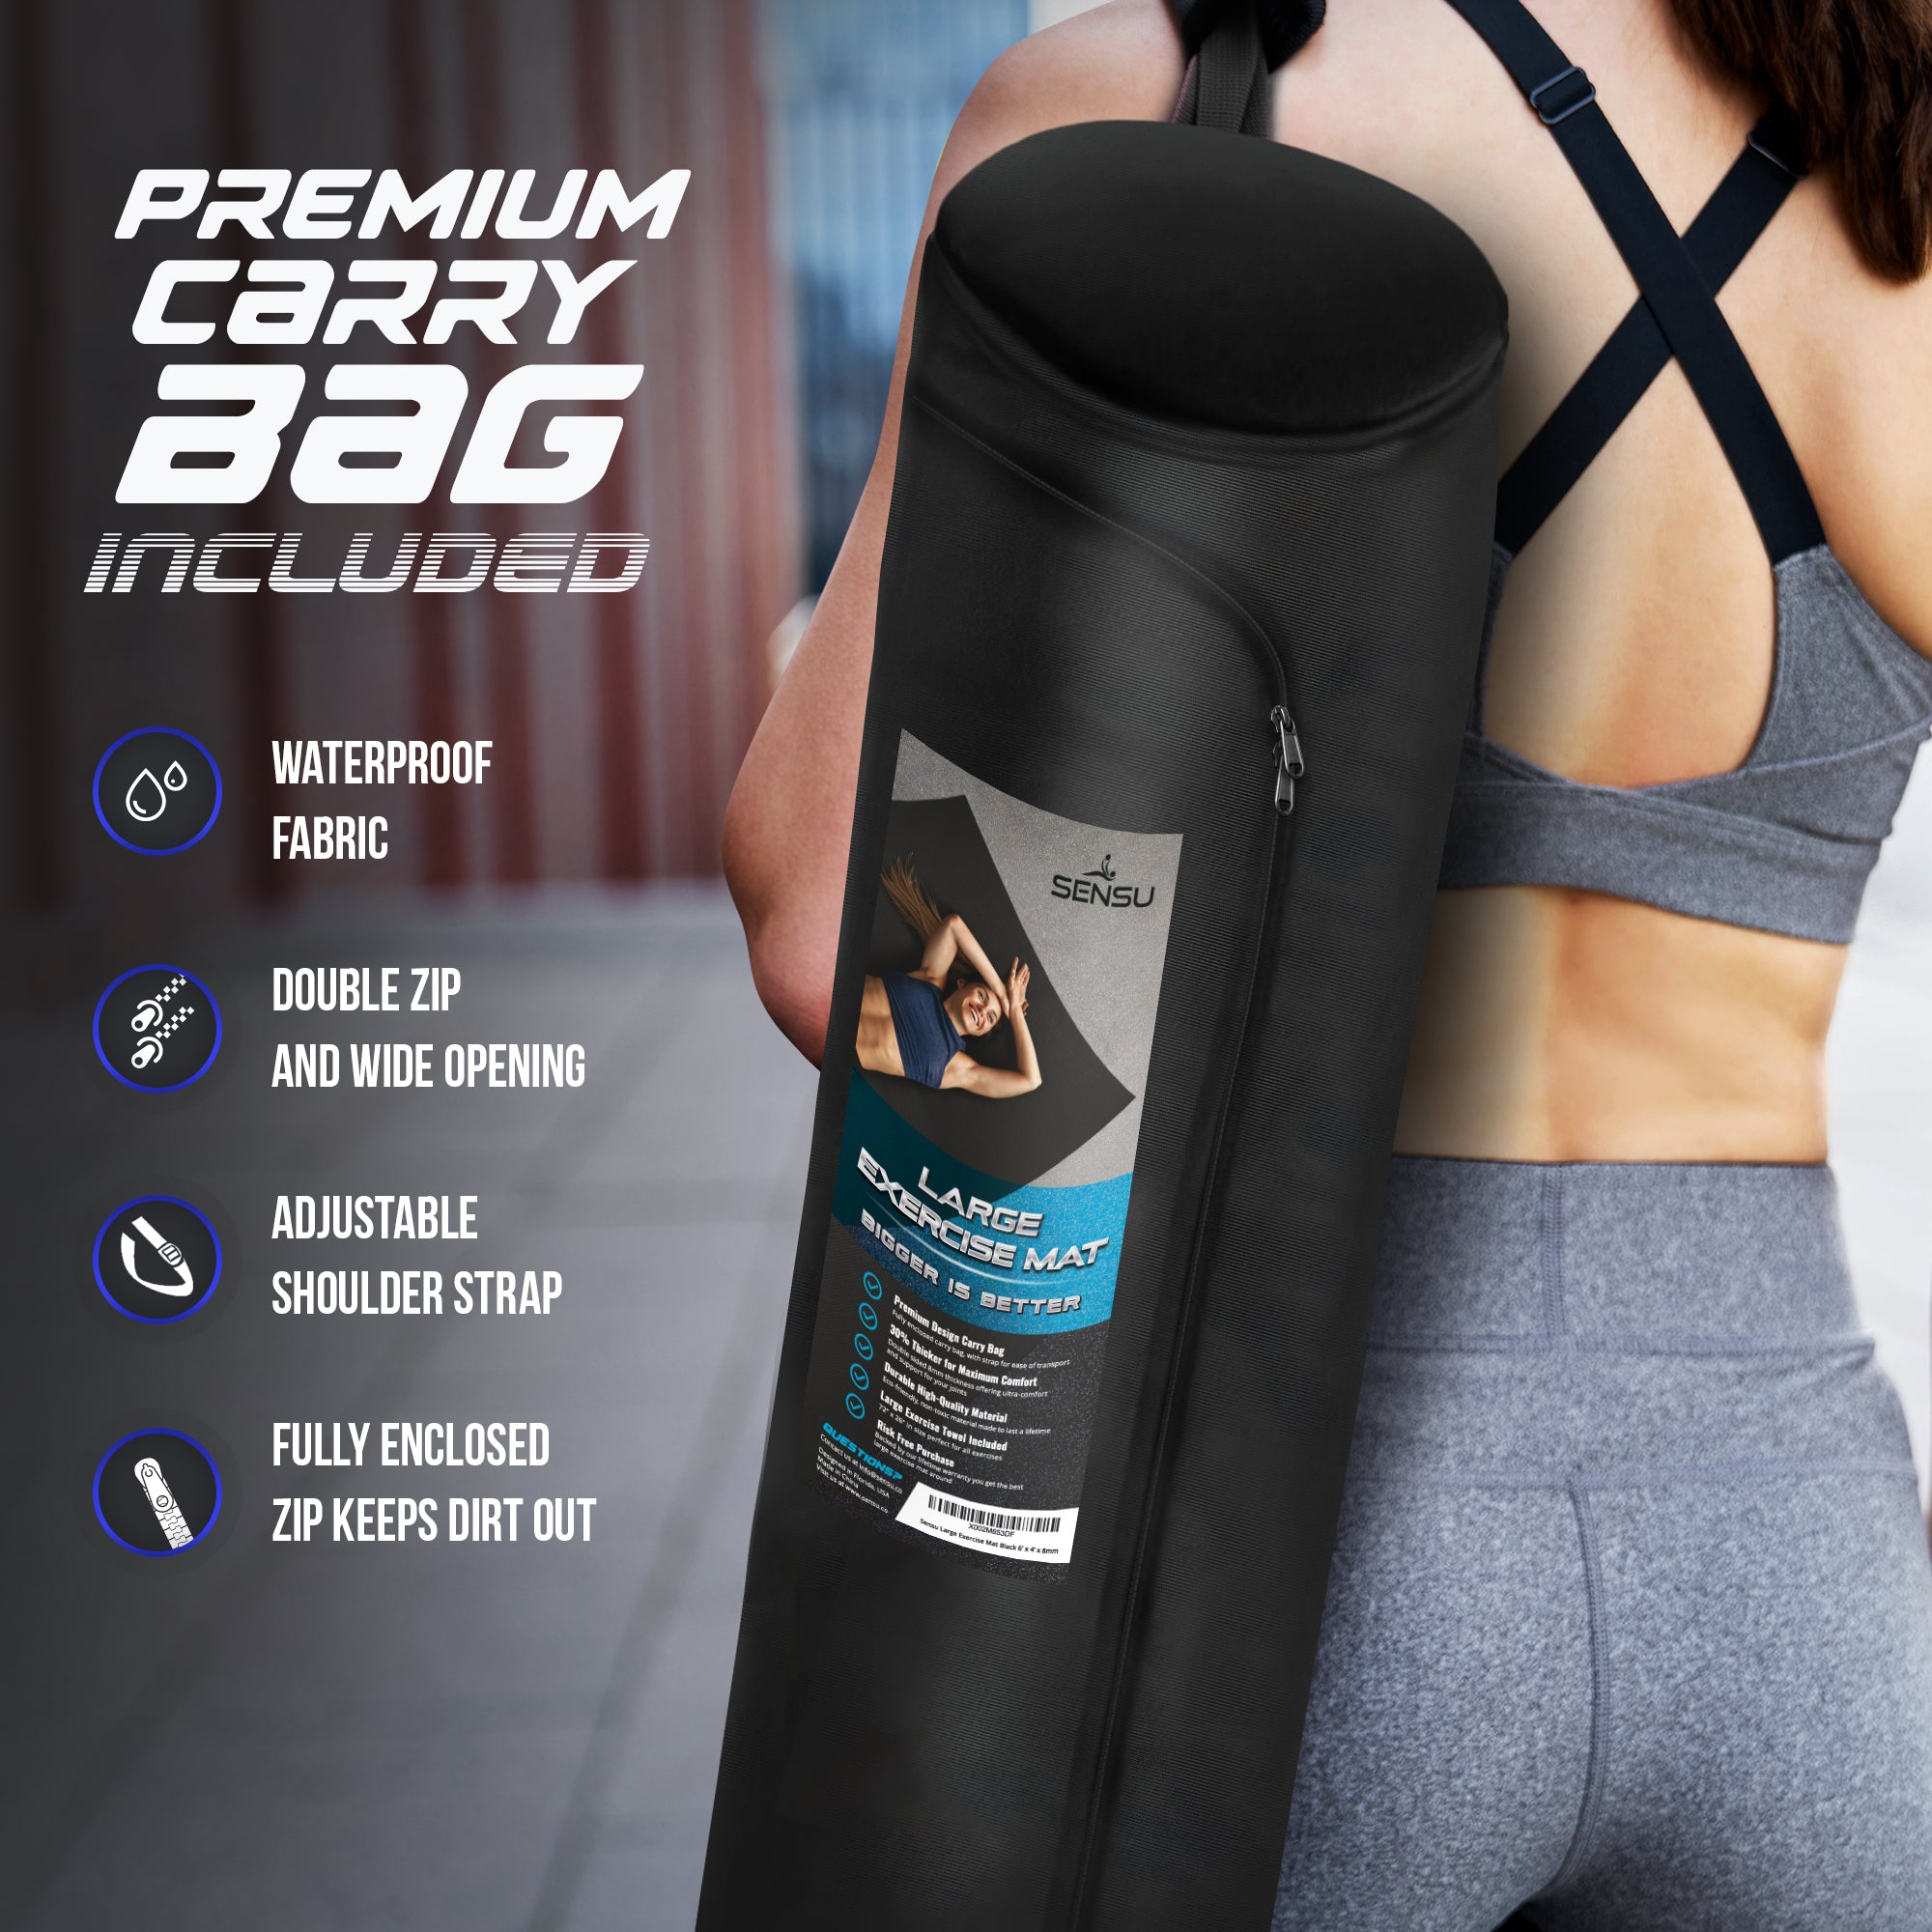 Sports Fitness Gym Yoga Bag Waterproof Pilates Mat Case Bag Carriers (no  mat)